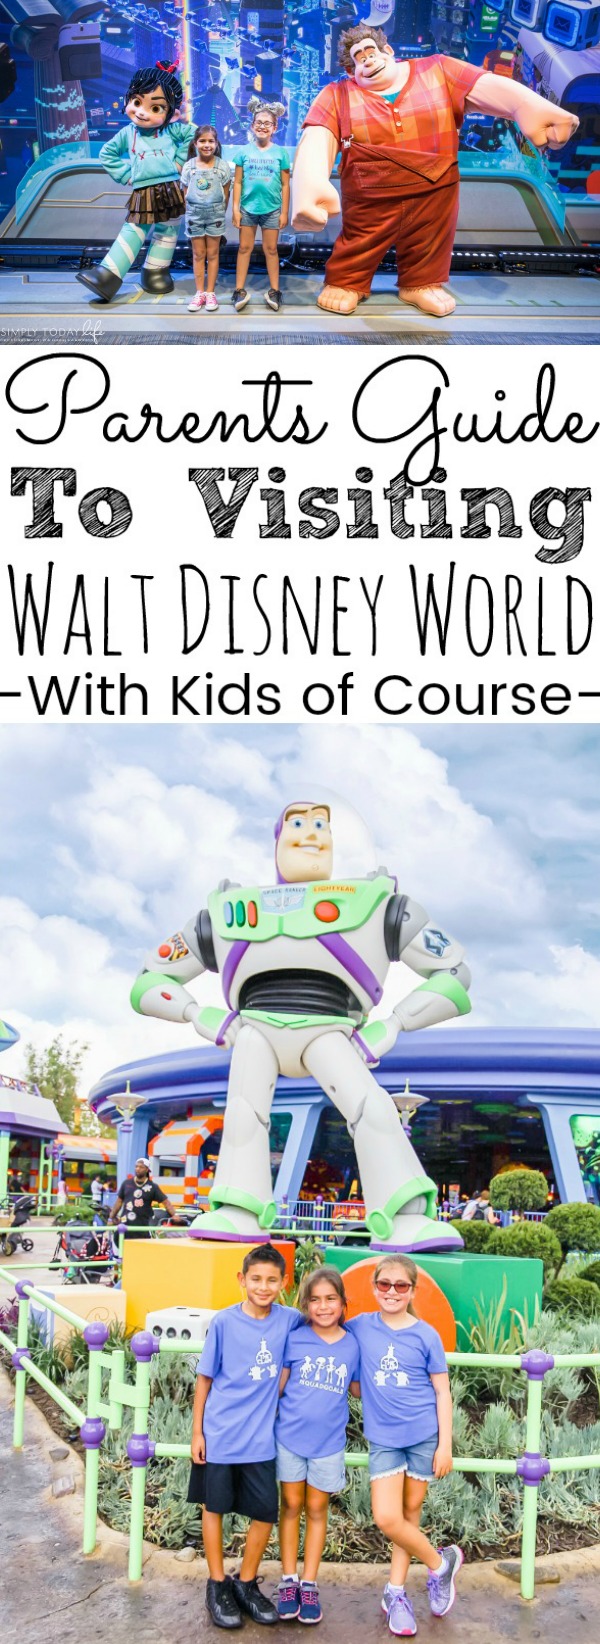 How To Visit Walt Disney World With Kids